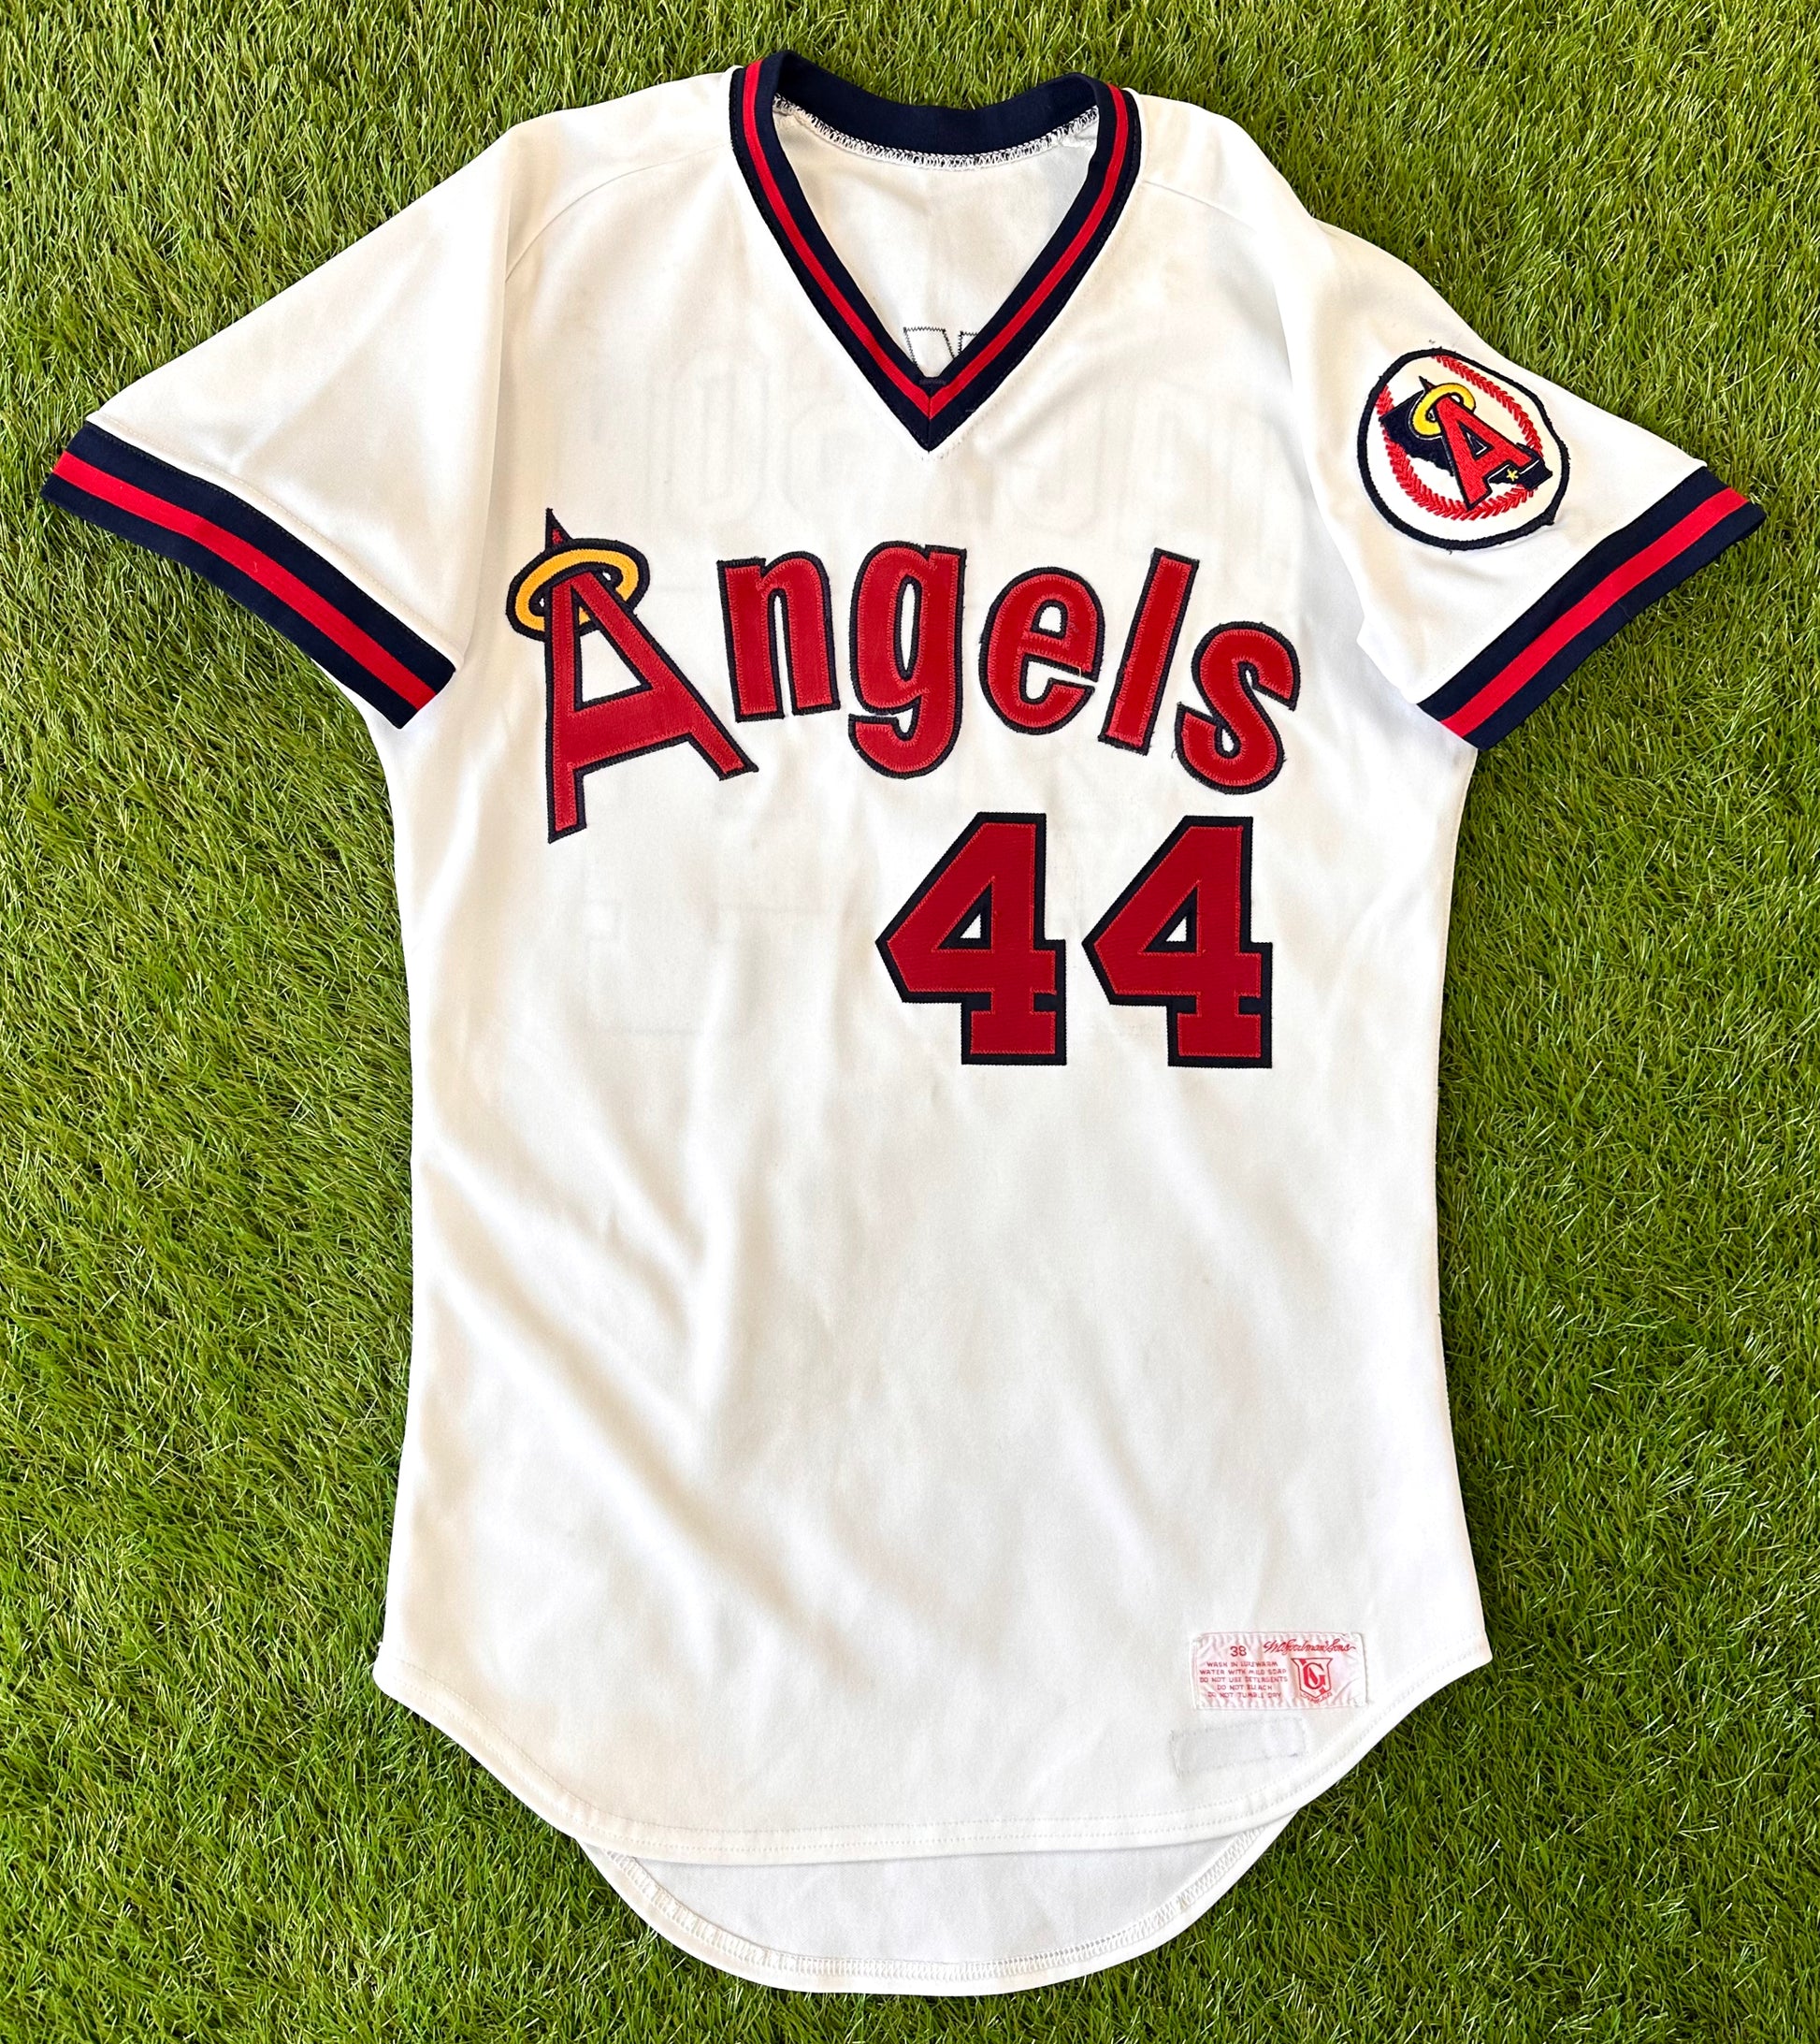 California Angels Reggie Jackson 1986 MLB Baseball Jersey (38